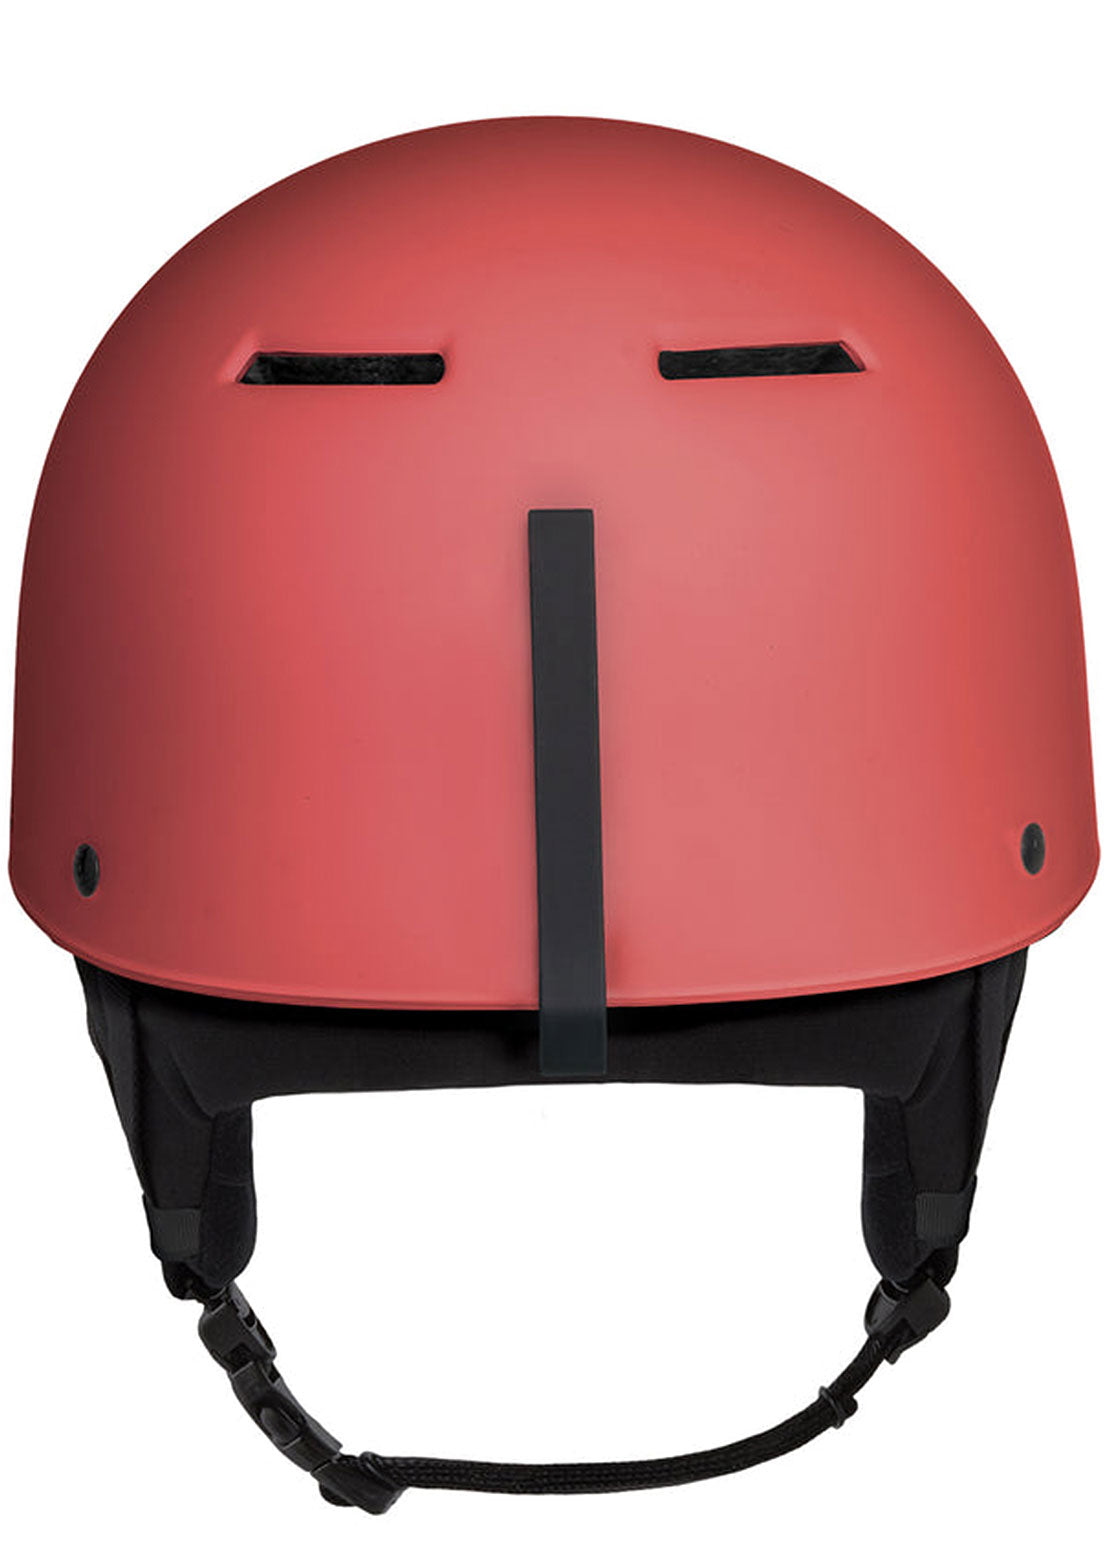 Sandbox Unisex Classic 2.0 Snow Winter Helmet Vermilion